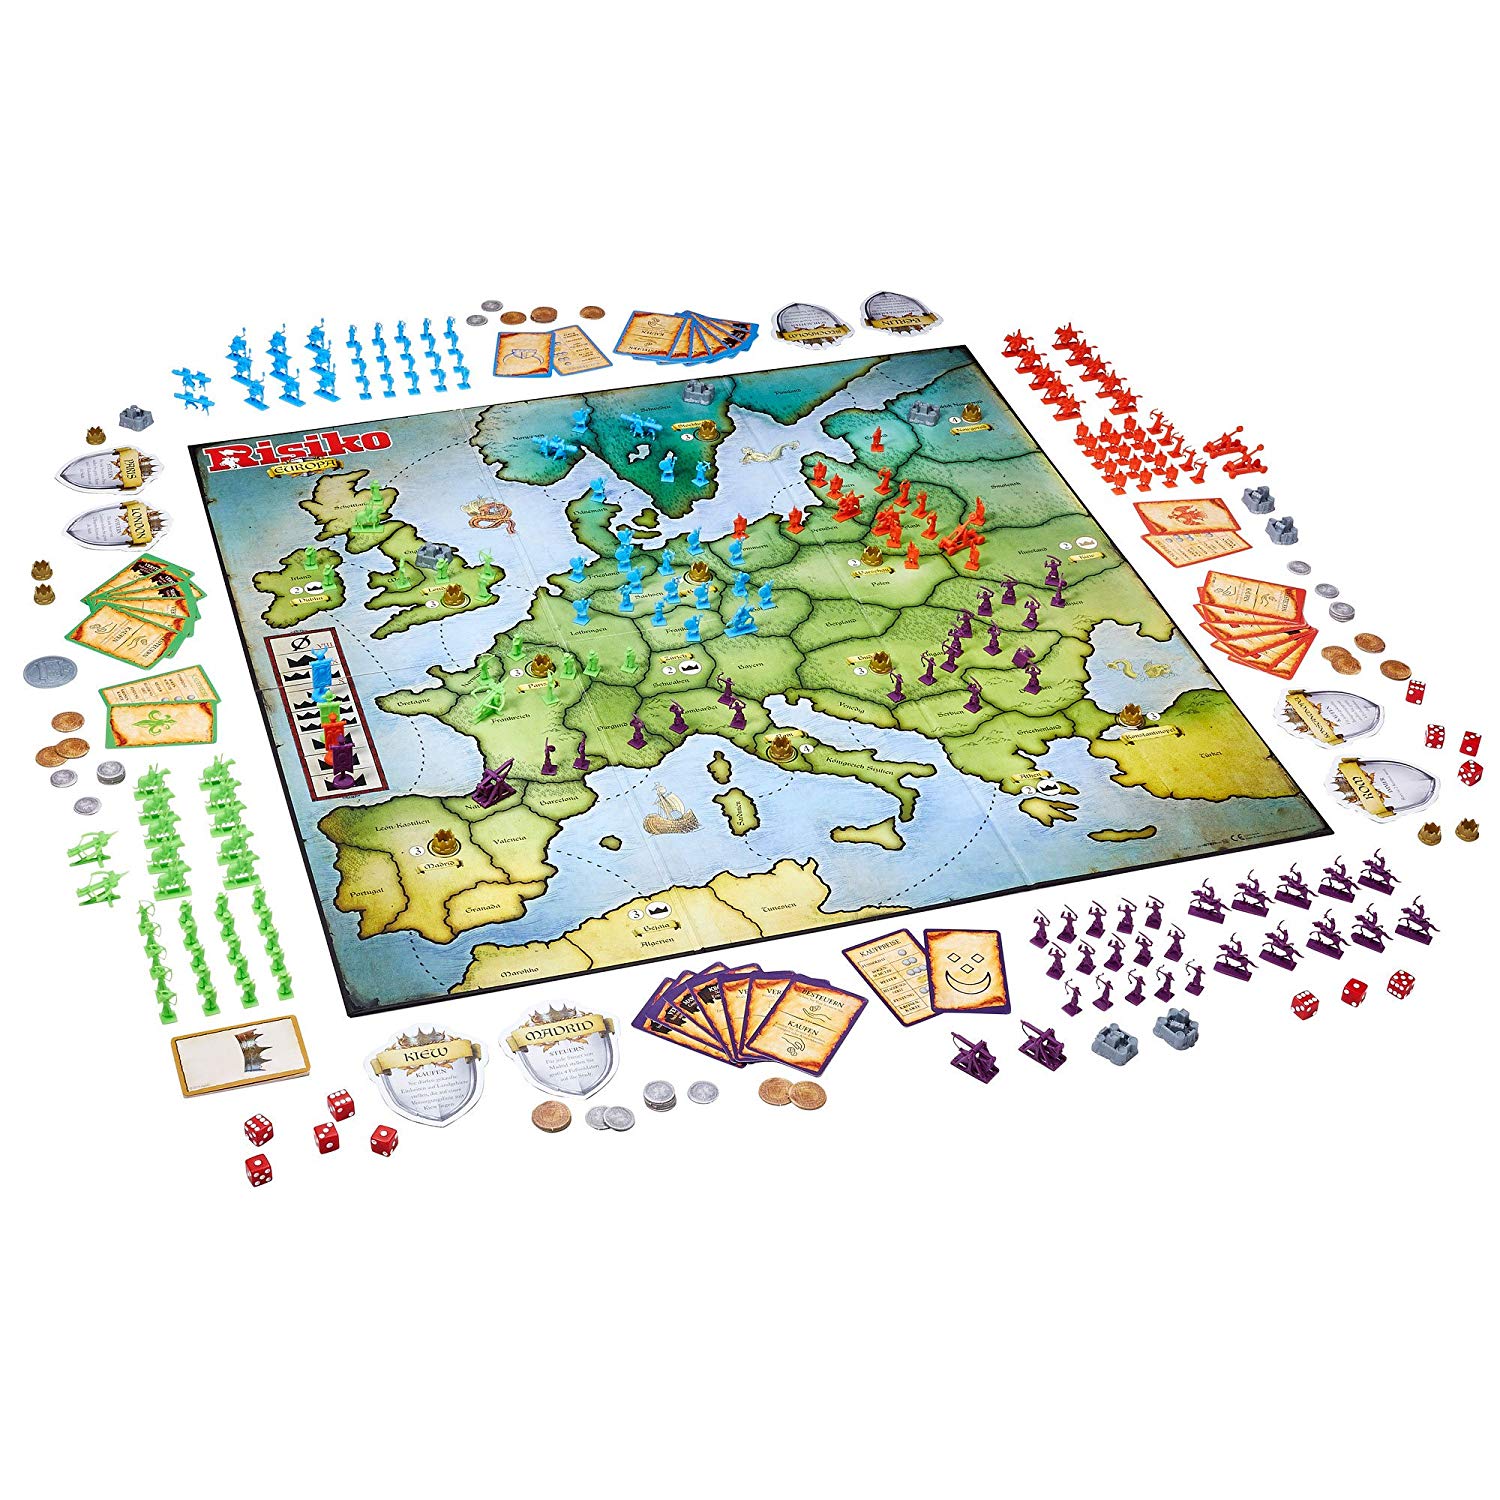 Hasbro Spiele B7409100 - Risiko Europa, Strategiespiel